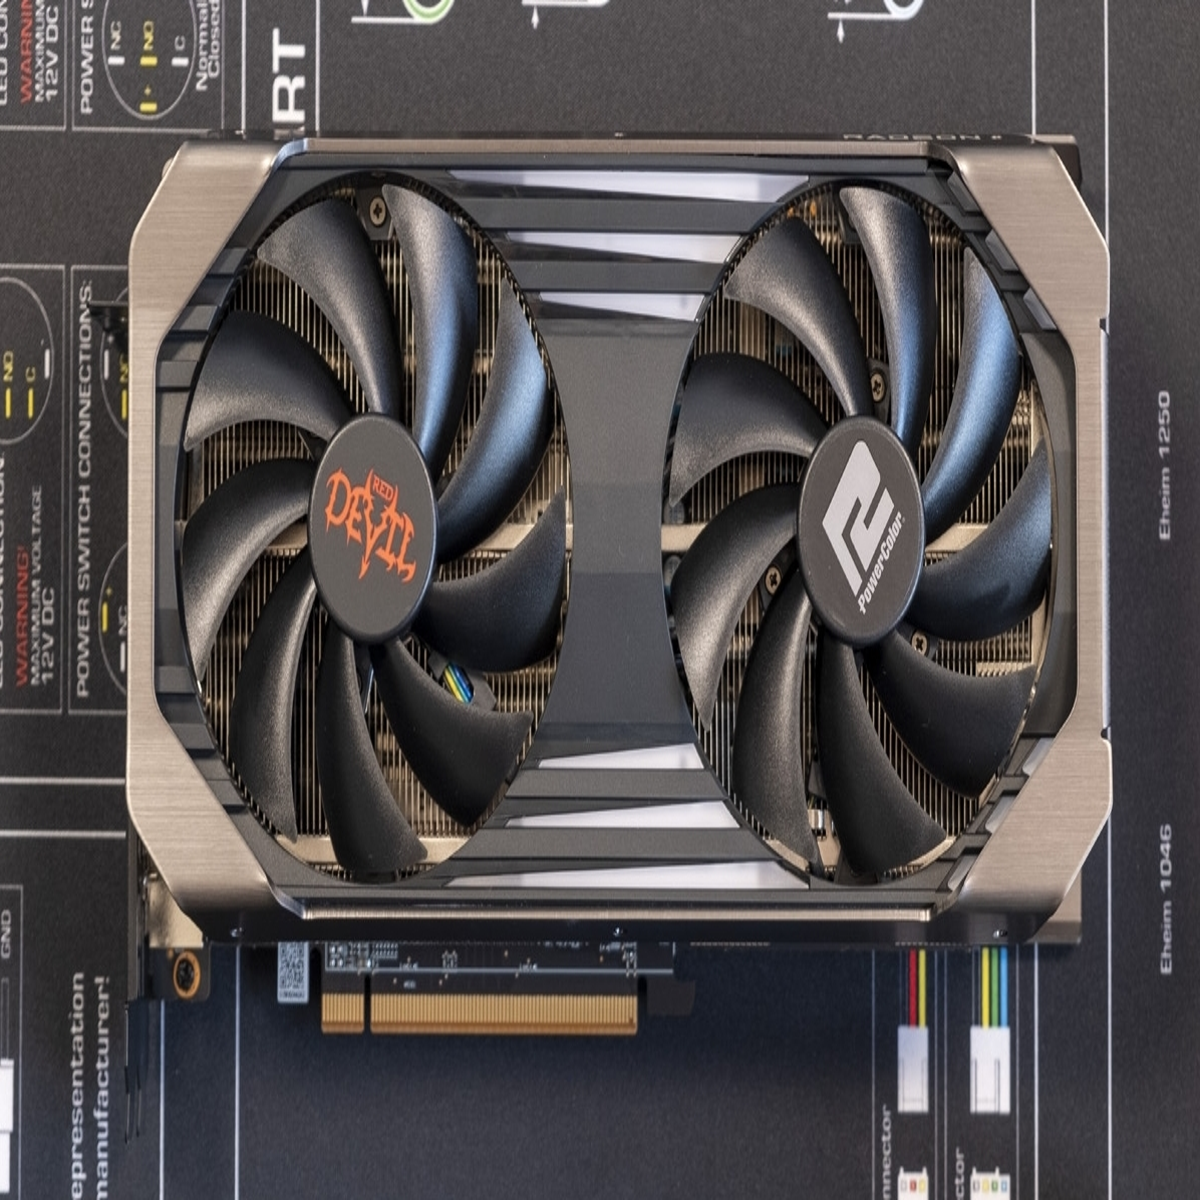 AMD Radeon RX 6600 XT review